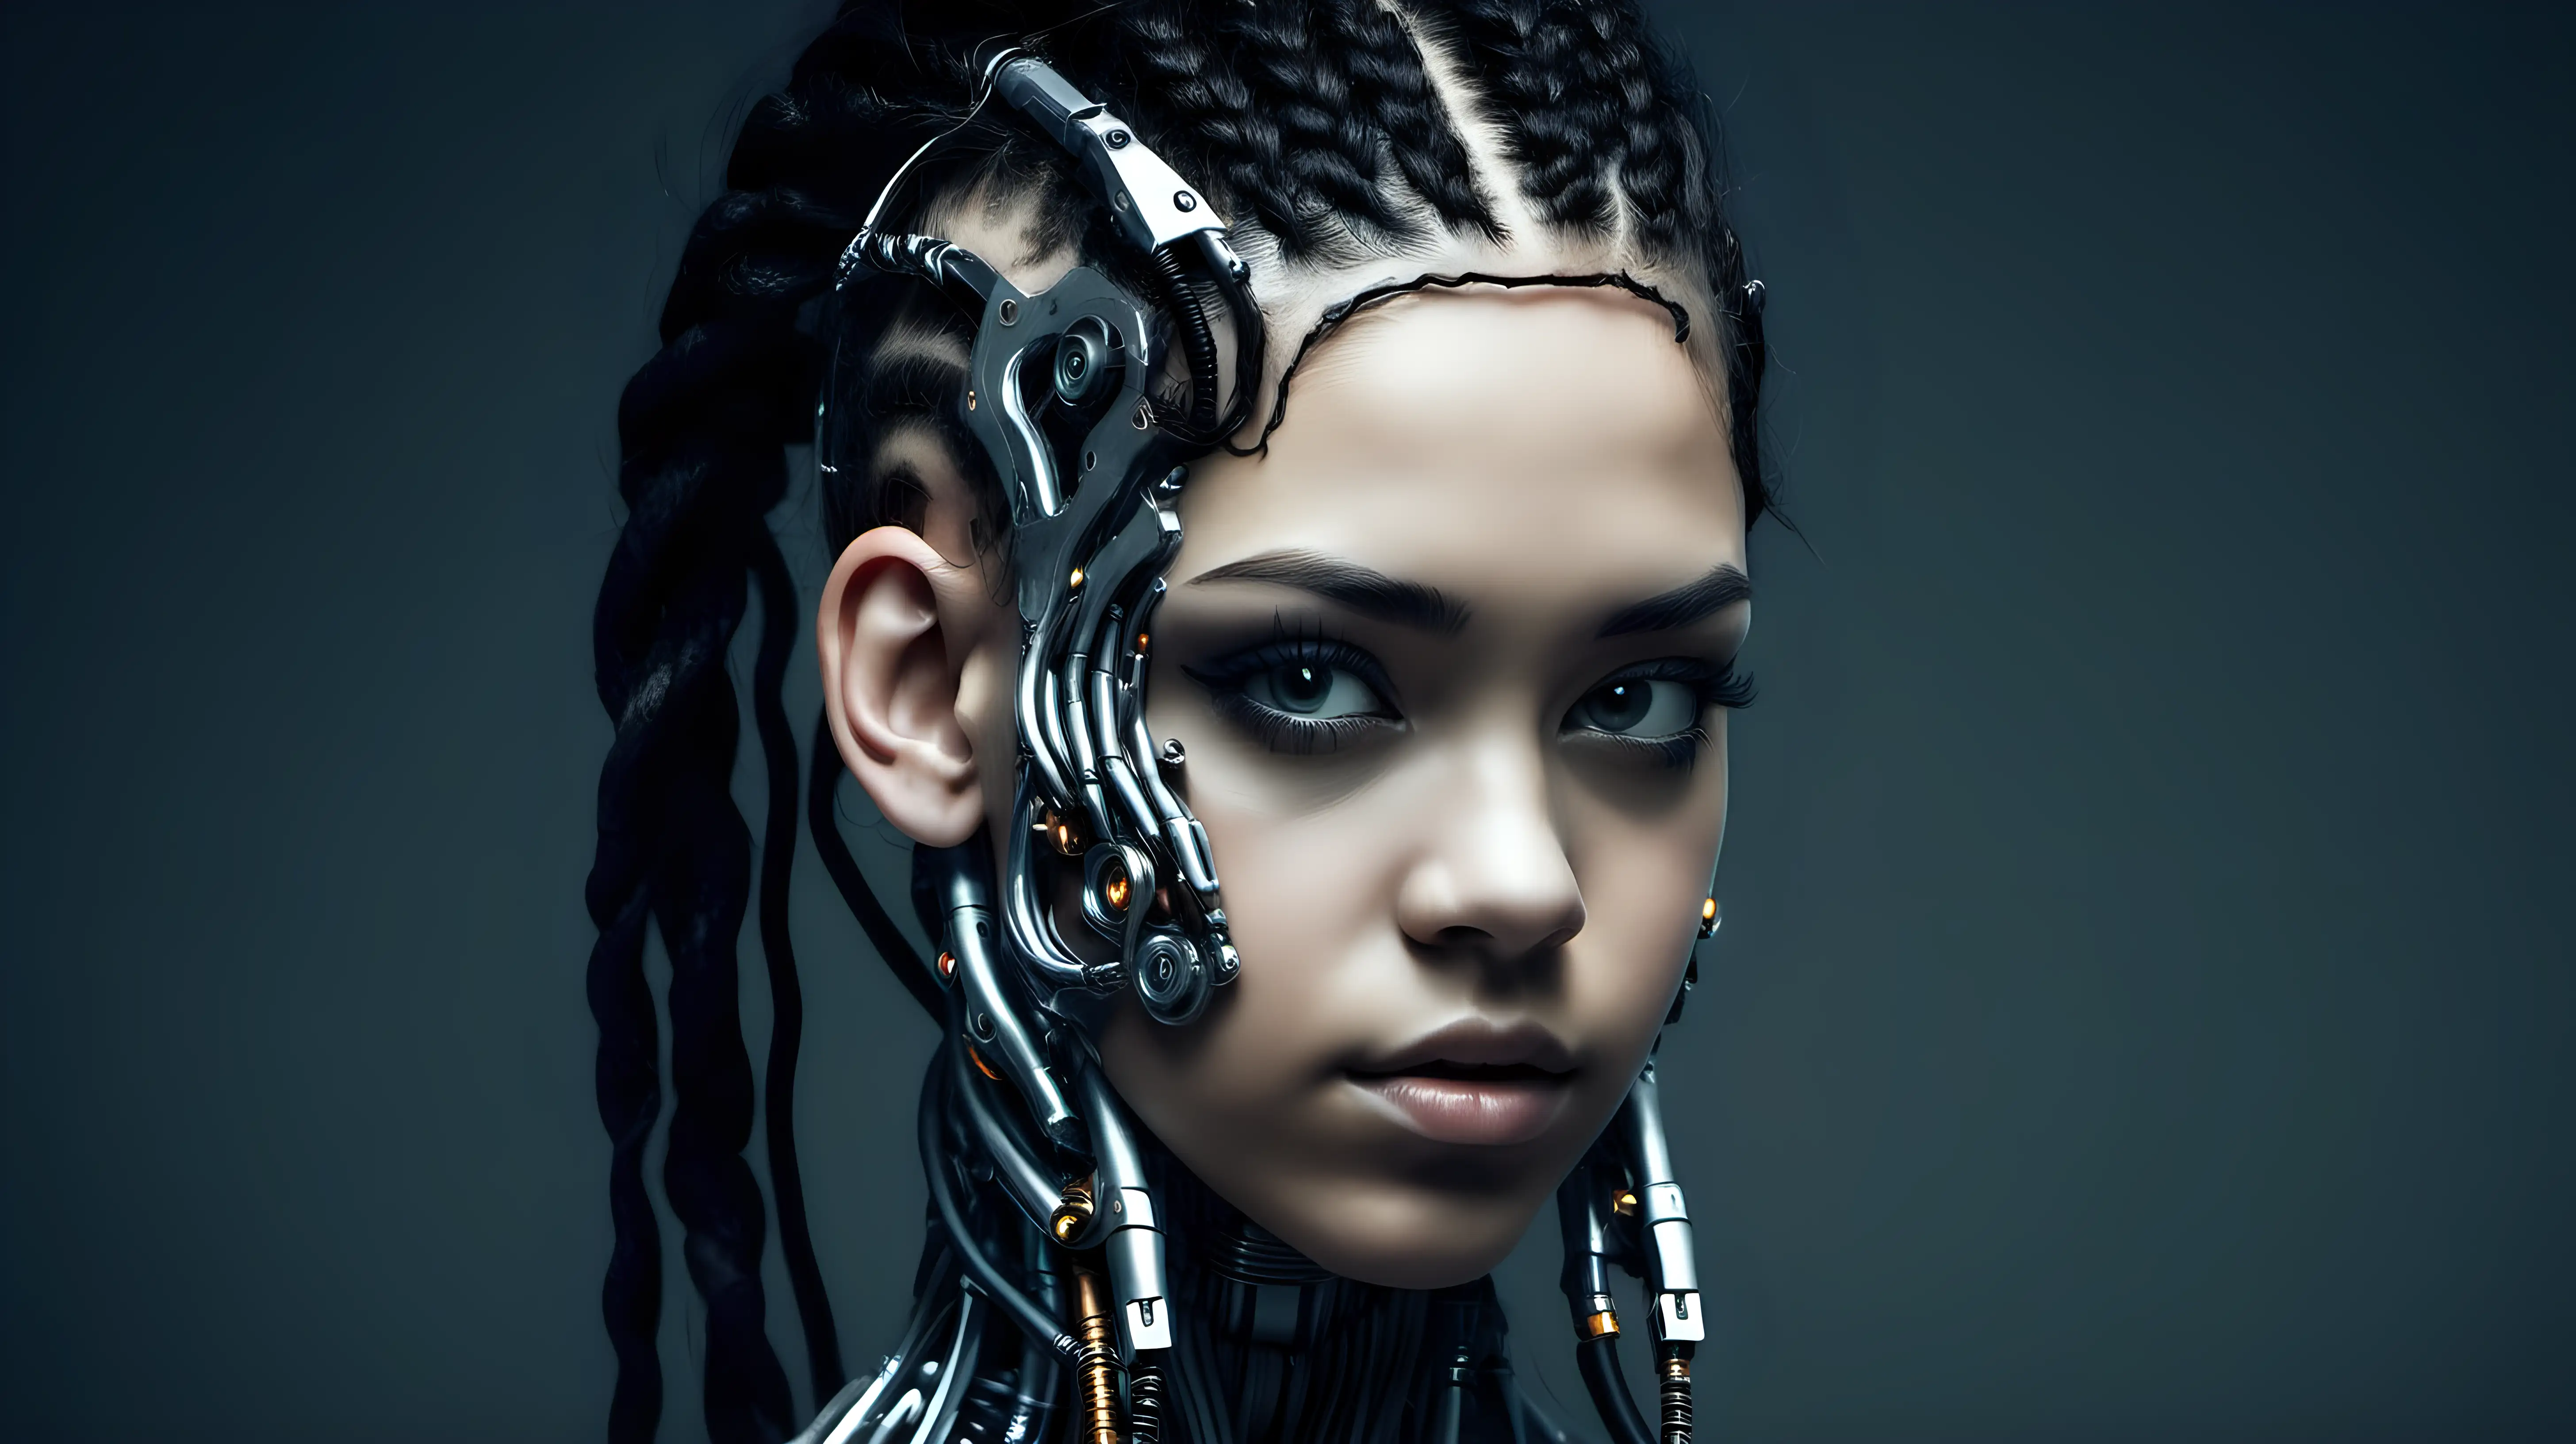 Beautiful Cyborg Woman with Wild Dark Braids